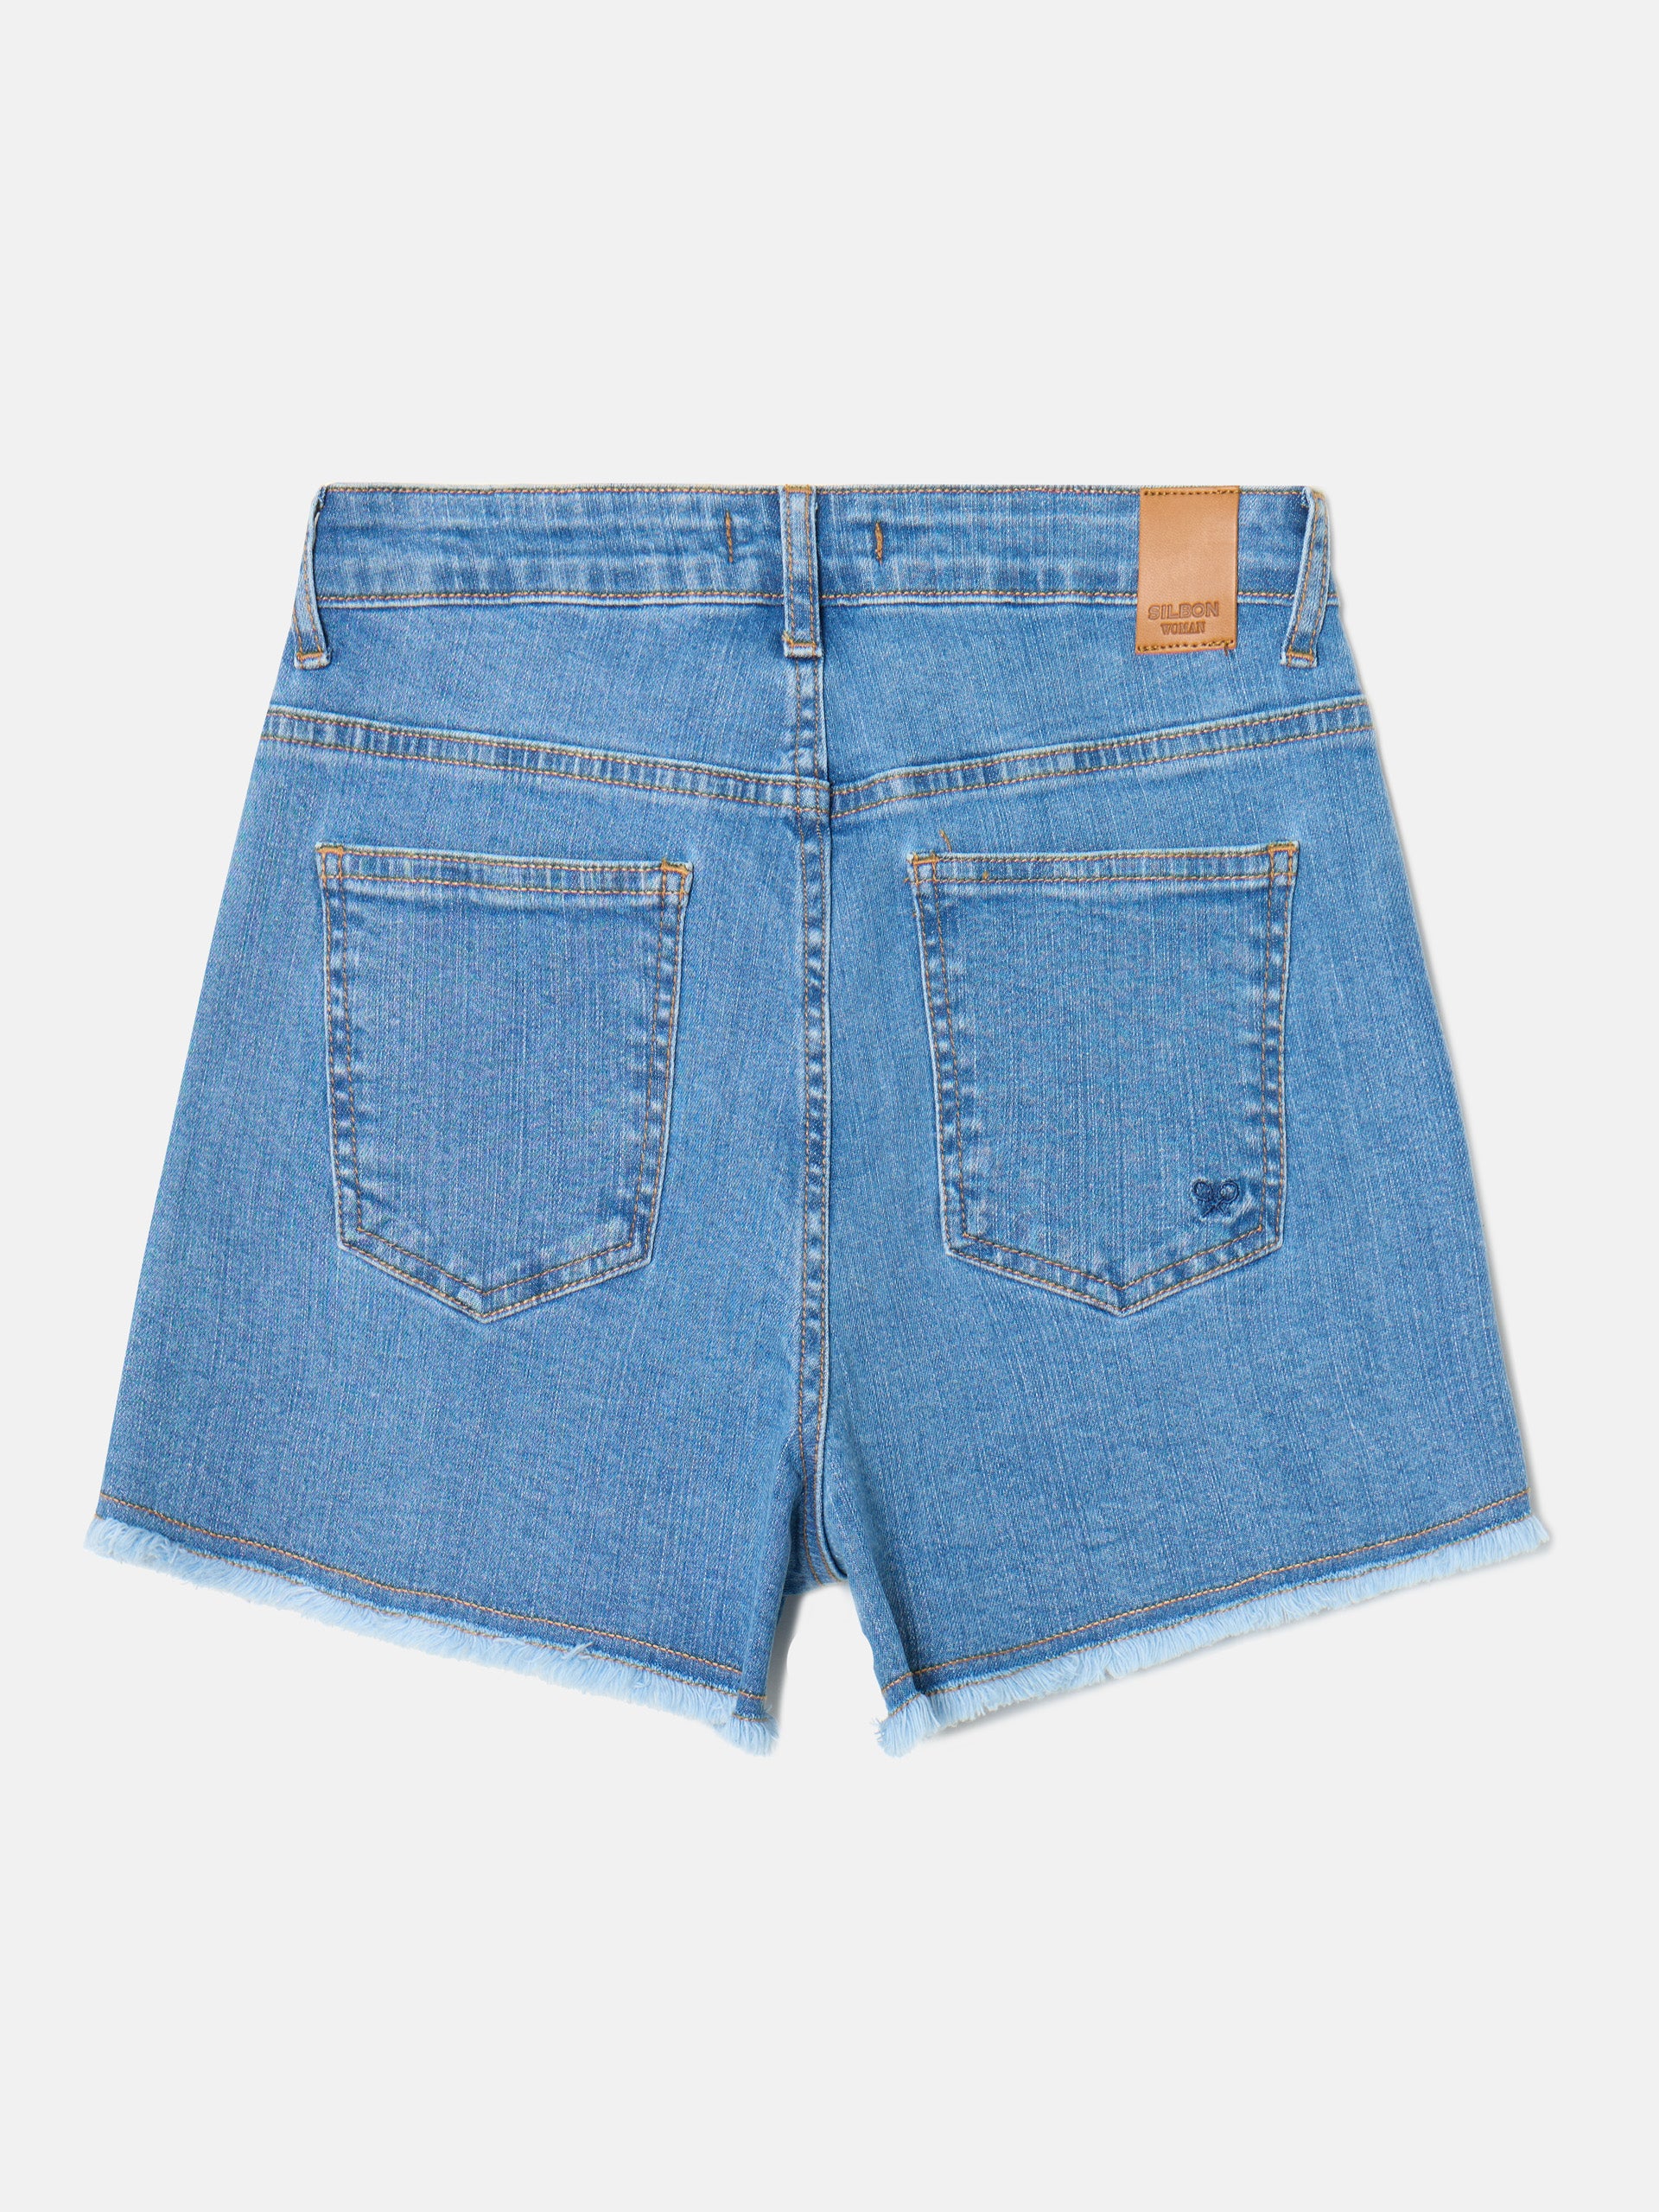 Medium denim shorts